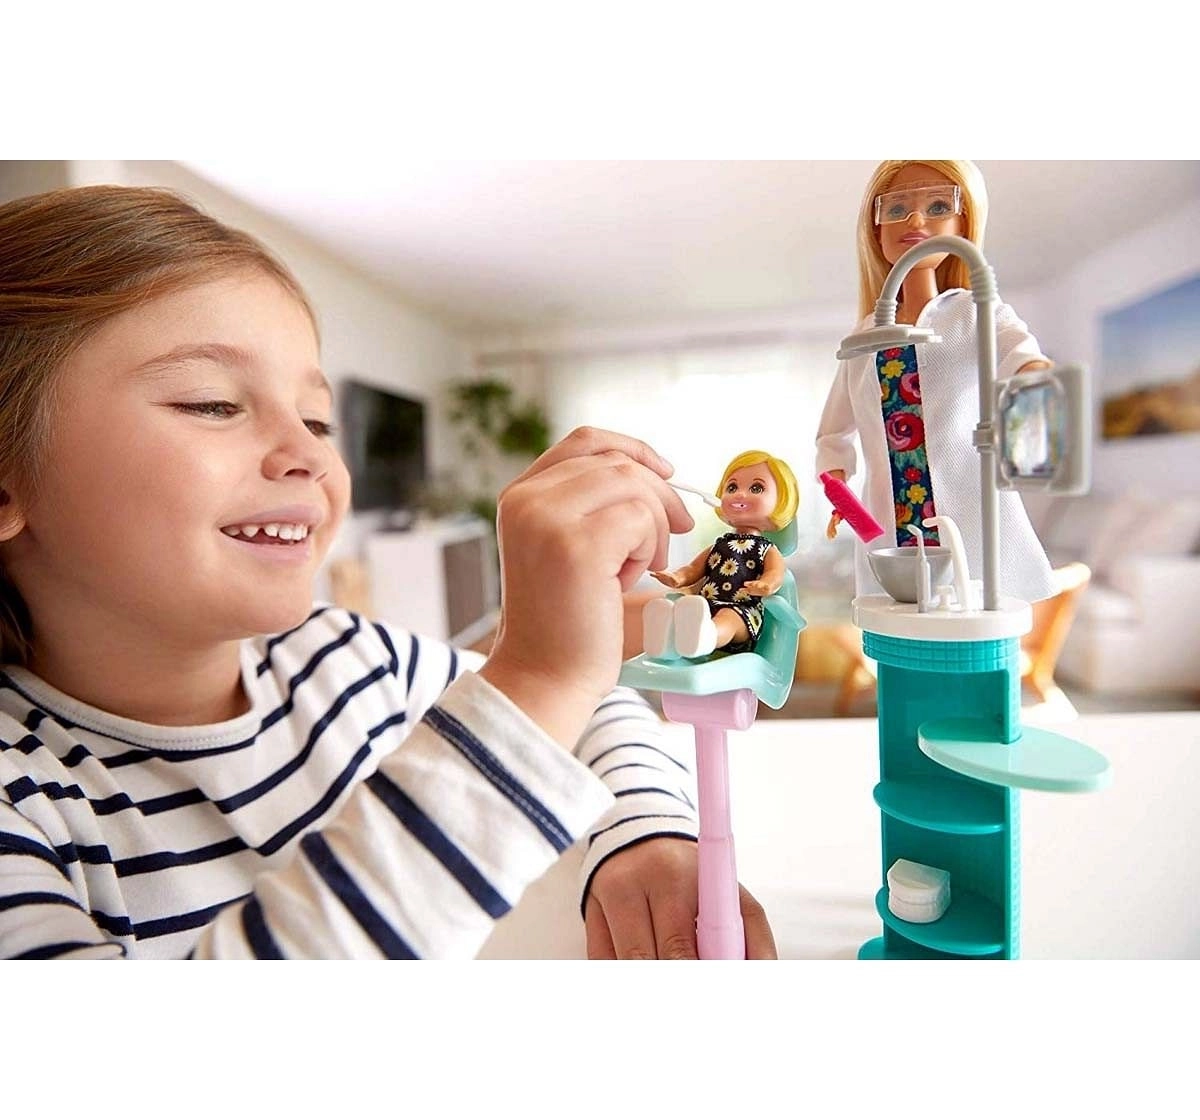 Barbie Dentist & Playset Dolls & Accessories for age 3Y+ 